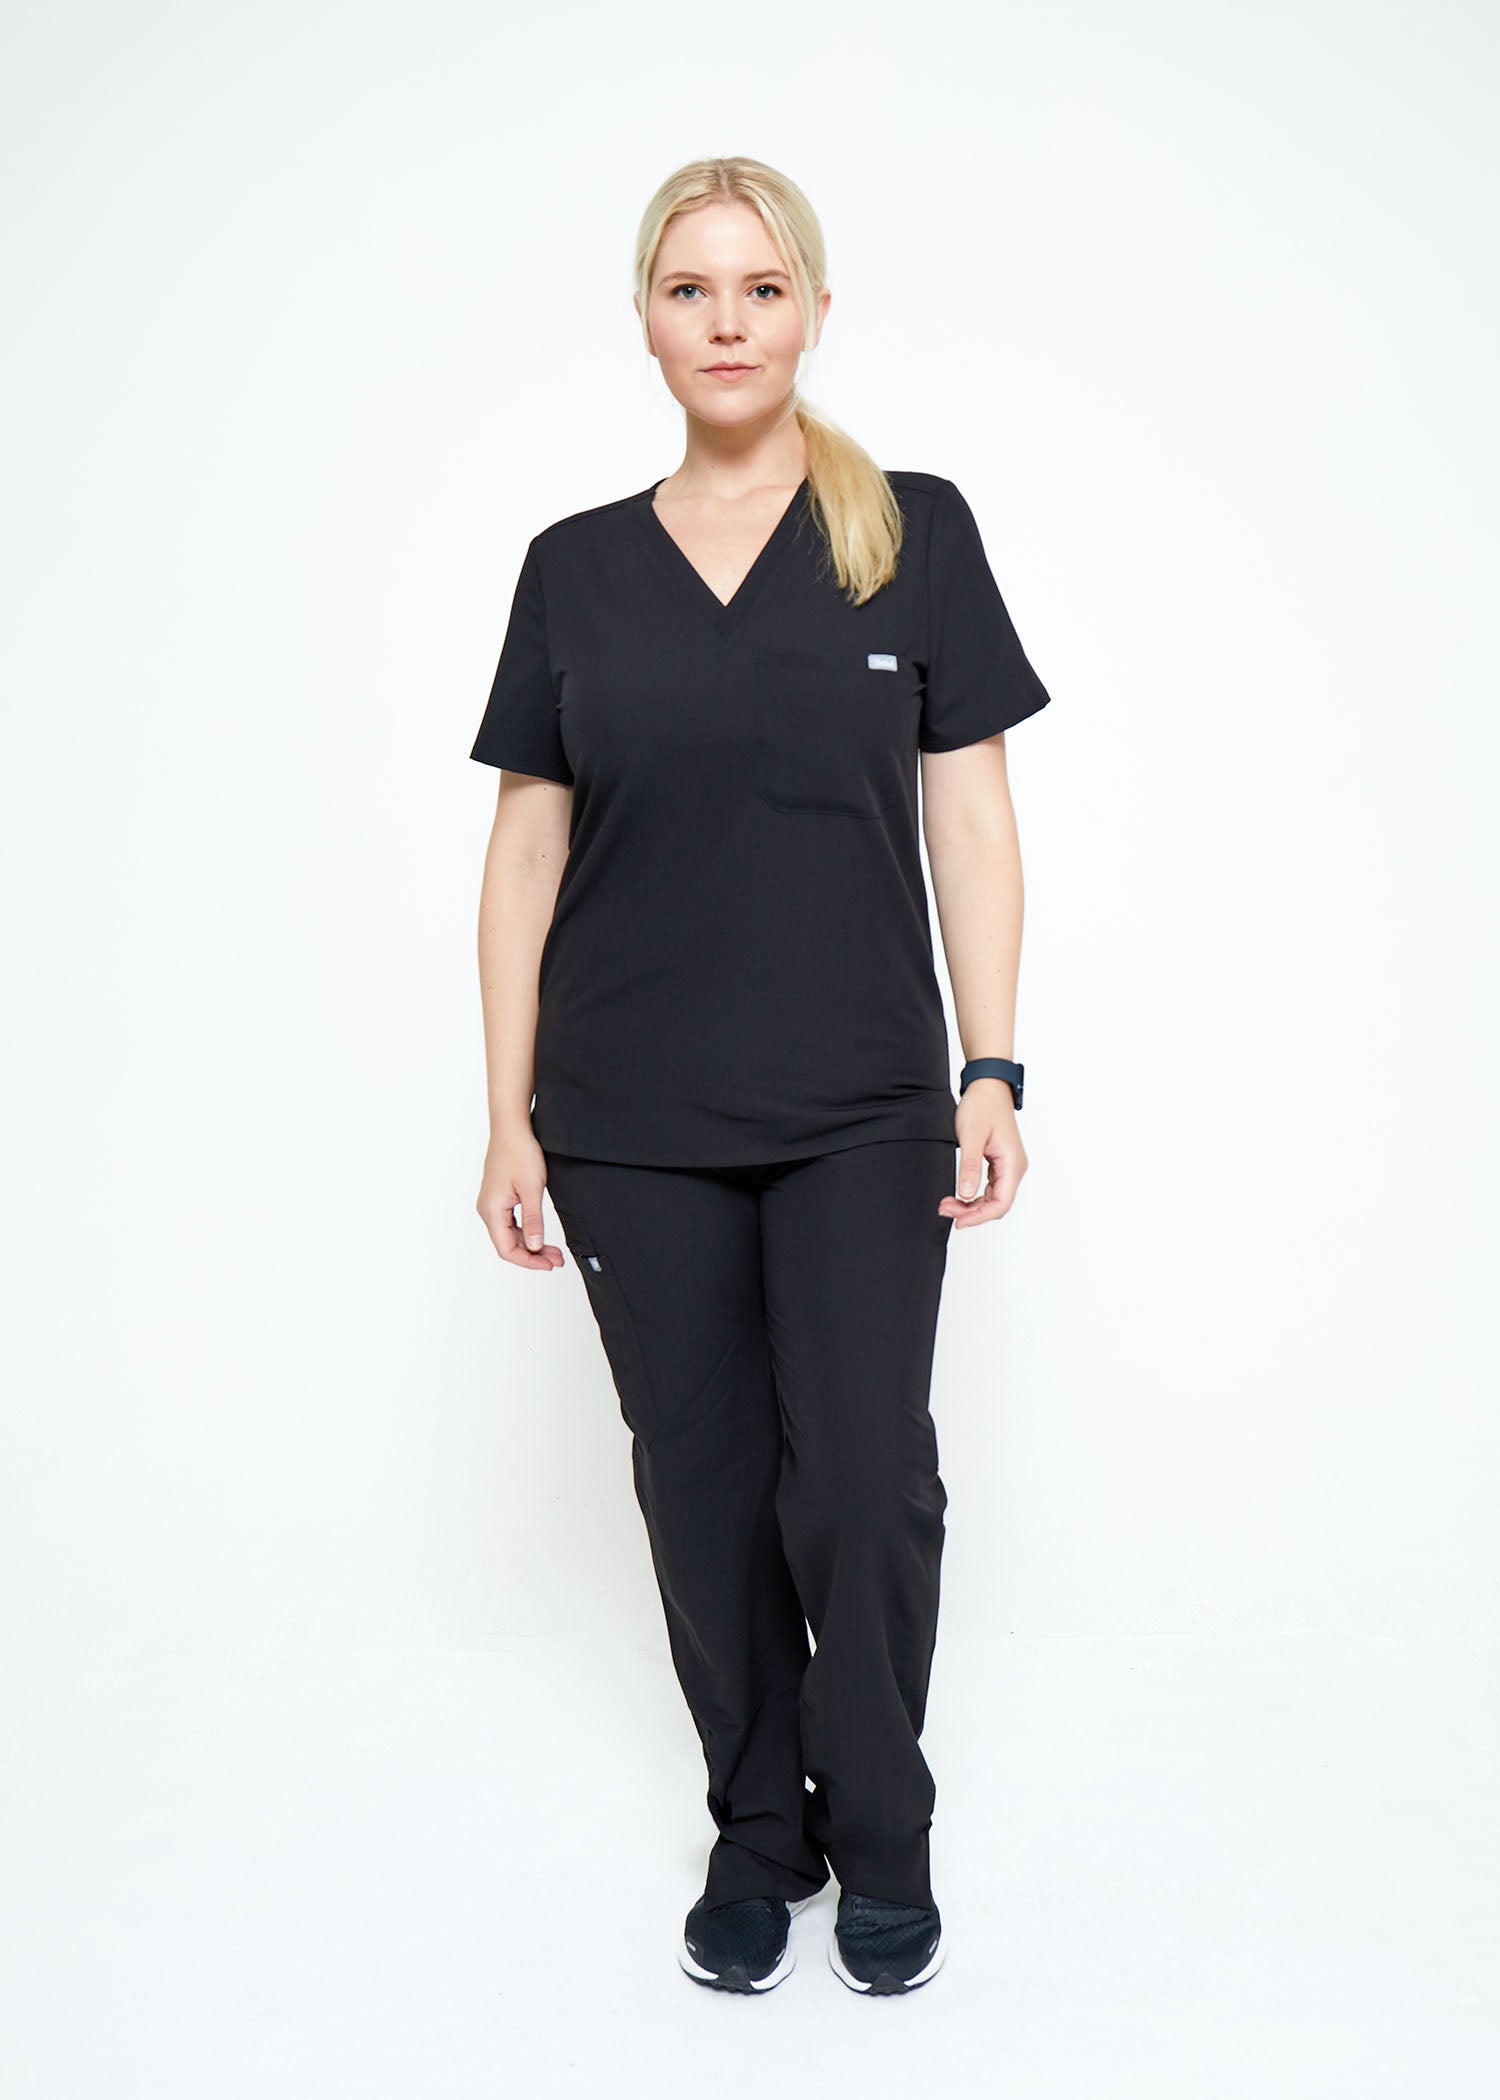 FIGS Catarina Scrub Tops for Women — Classic Fit, 1 Pocket, Four-Way  Stretch, Anti-Wrinkle Women's Medical Scrub Top, Black, XXS : :  Fashion